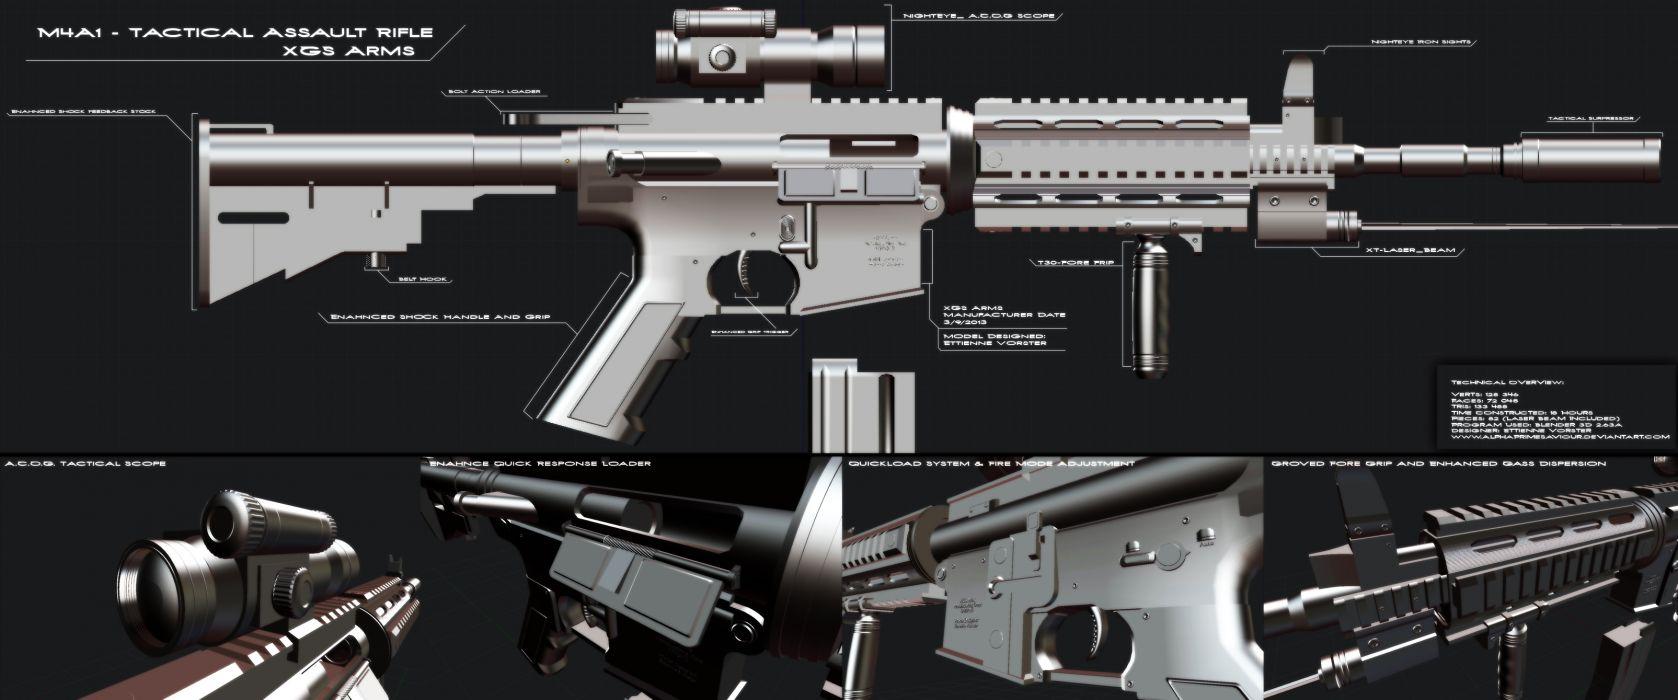 M4A1 weapon gun military rifle police poster y wallpaperx1339